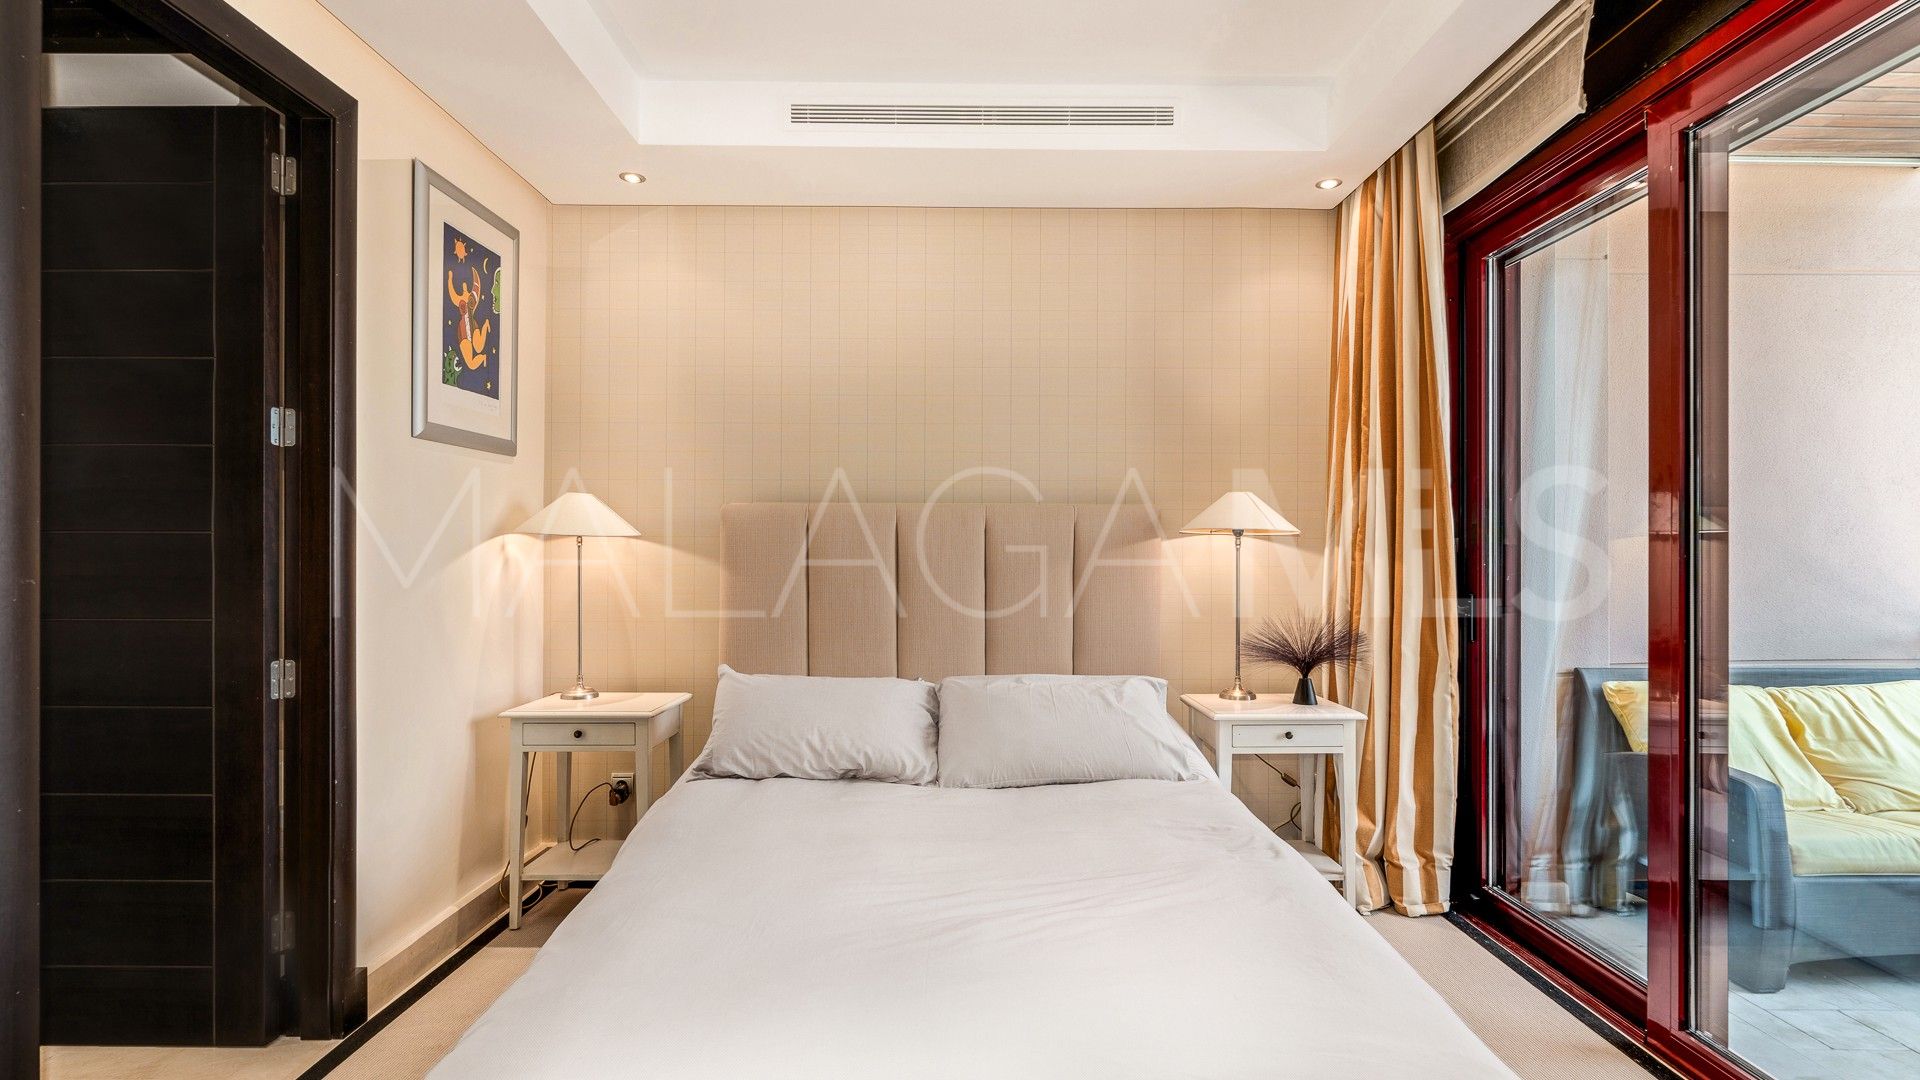 Atico for sale in Marbella - Puerto Banus with 3 bedrooms